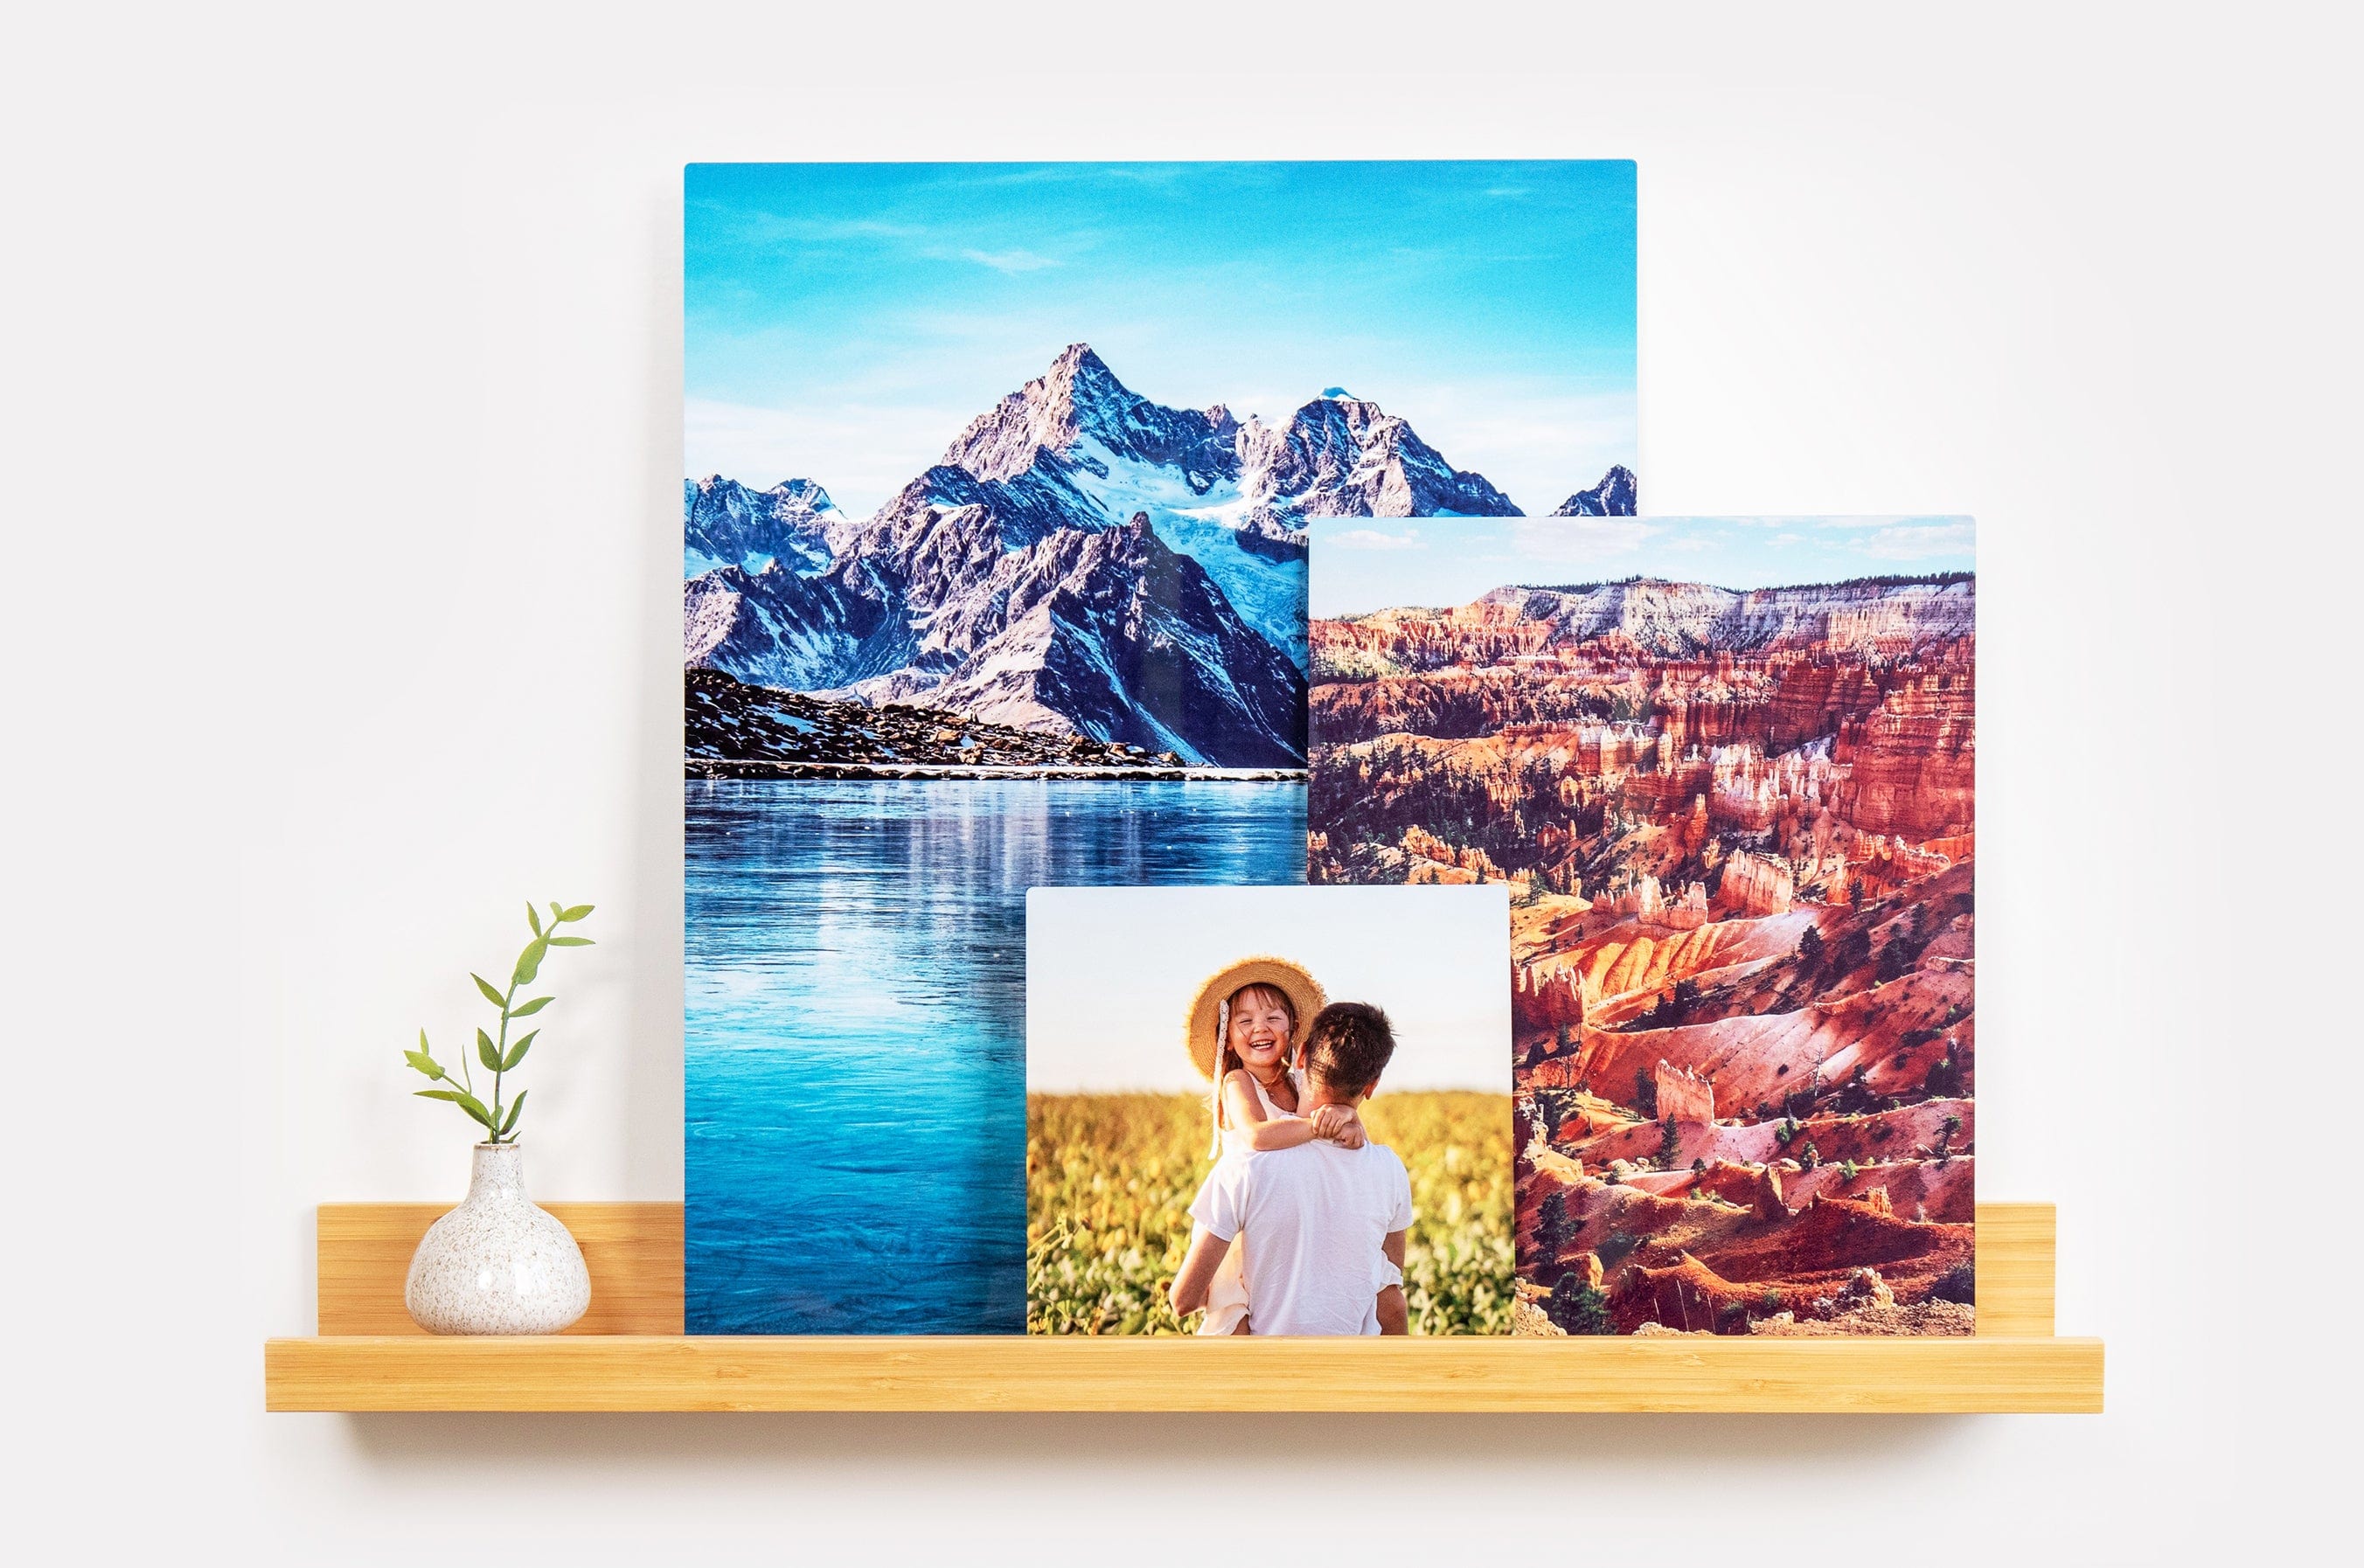 Order Standard Photos, Buy 4x6, 5x7, 8x10 Prints Online